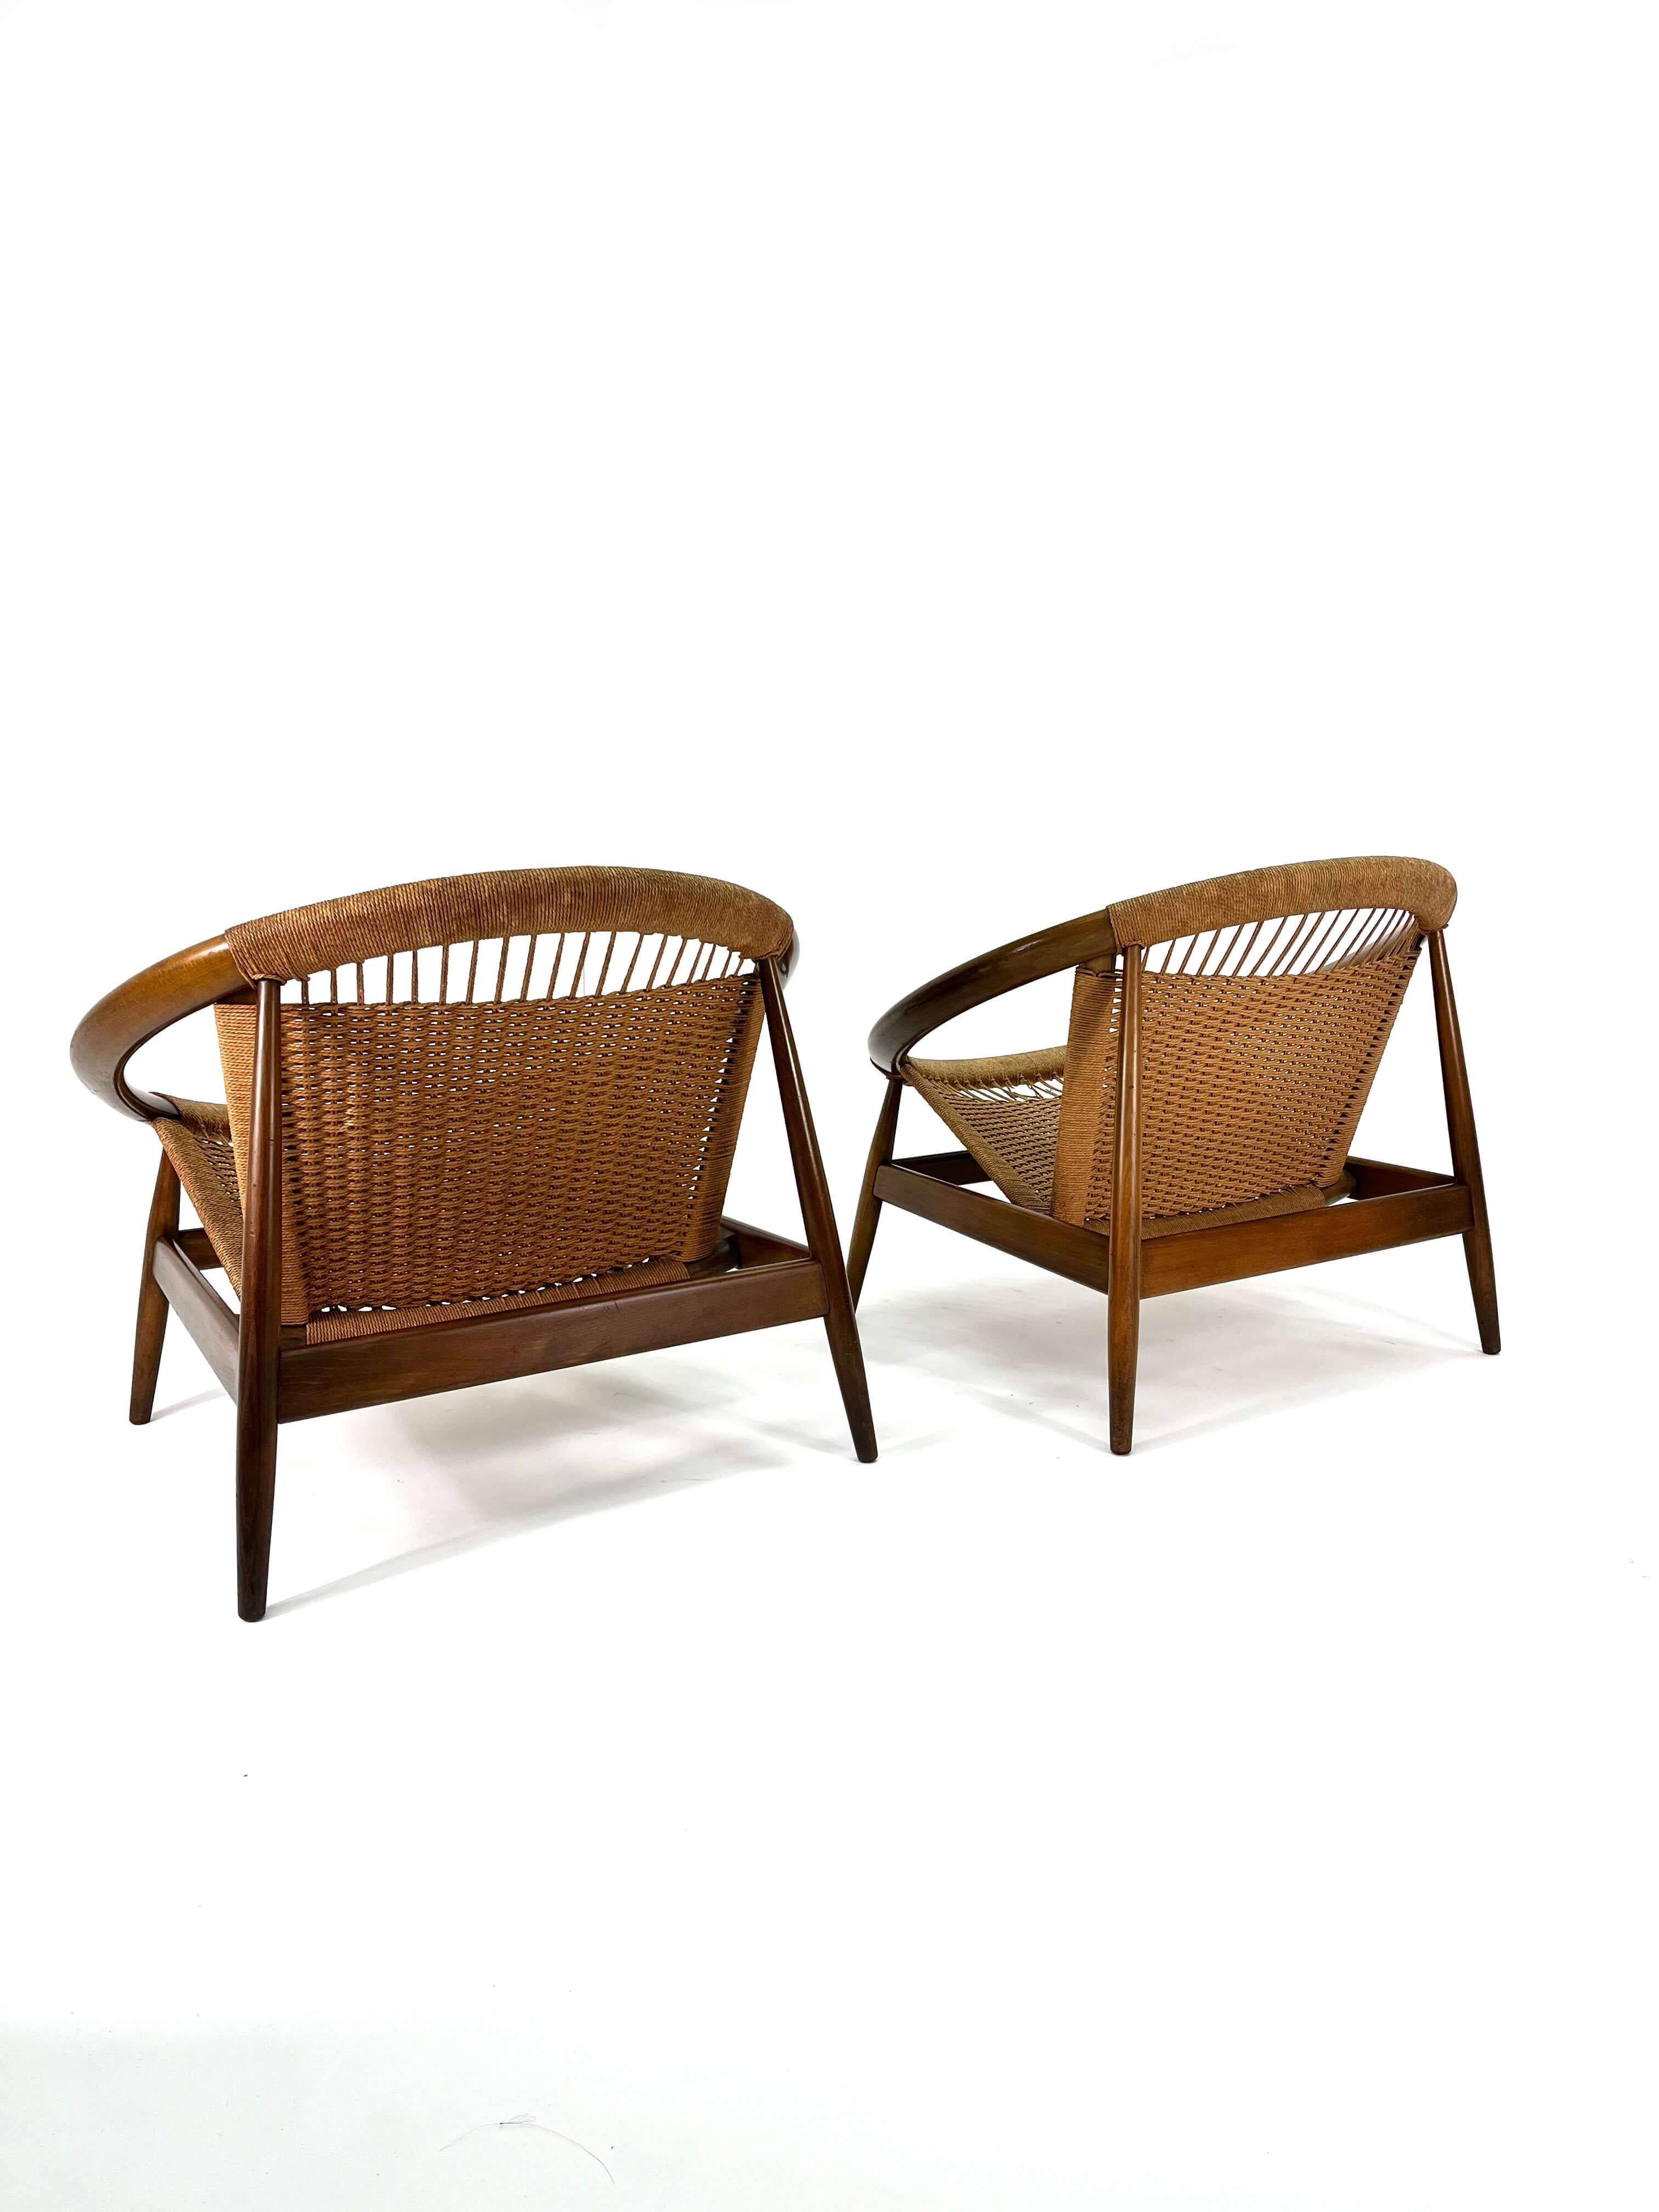 Corde Mid-Century Modern Ringstol Lounge Chair by Illum Wikkelsø en vente